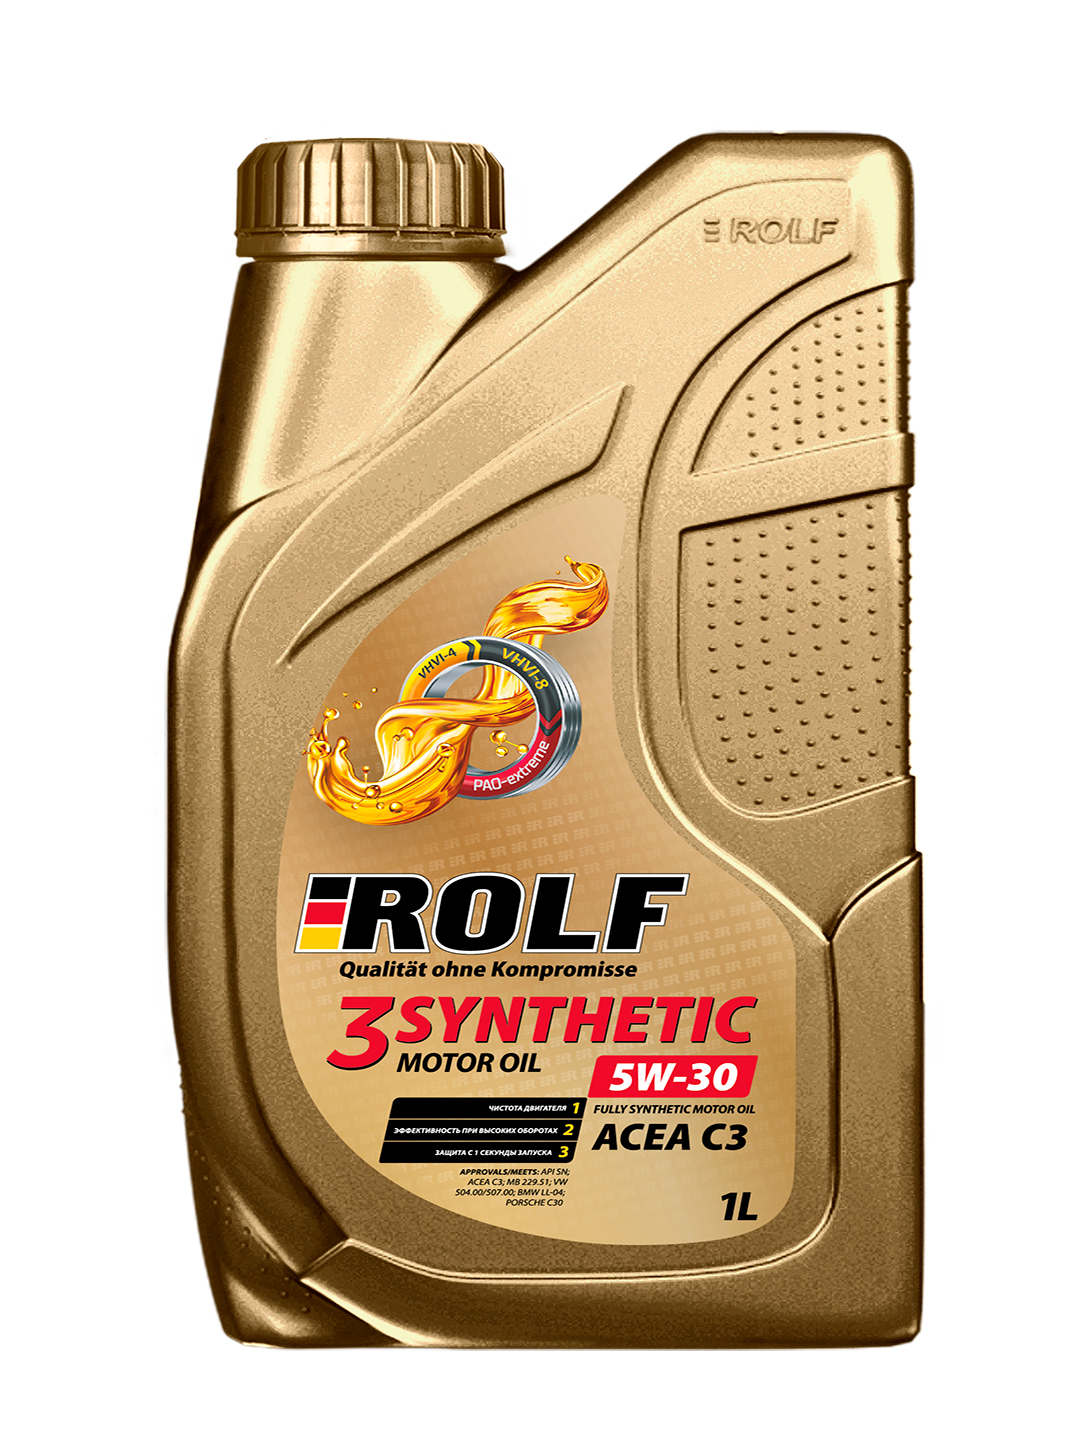  масло ROLF 3-SYNTHETIC 5W-30, ACEA С3 Синтетическое 1 л .